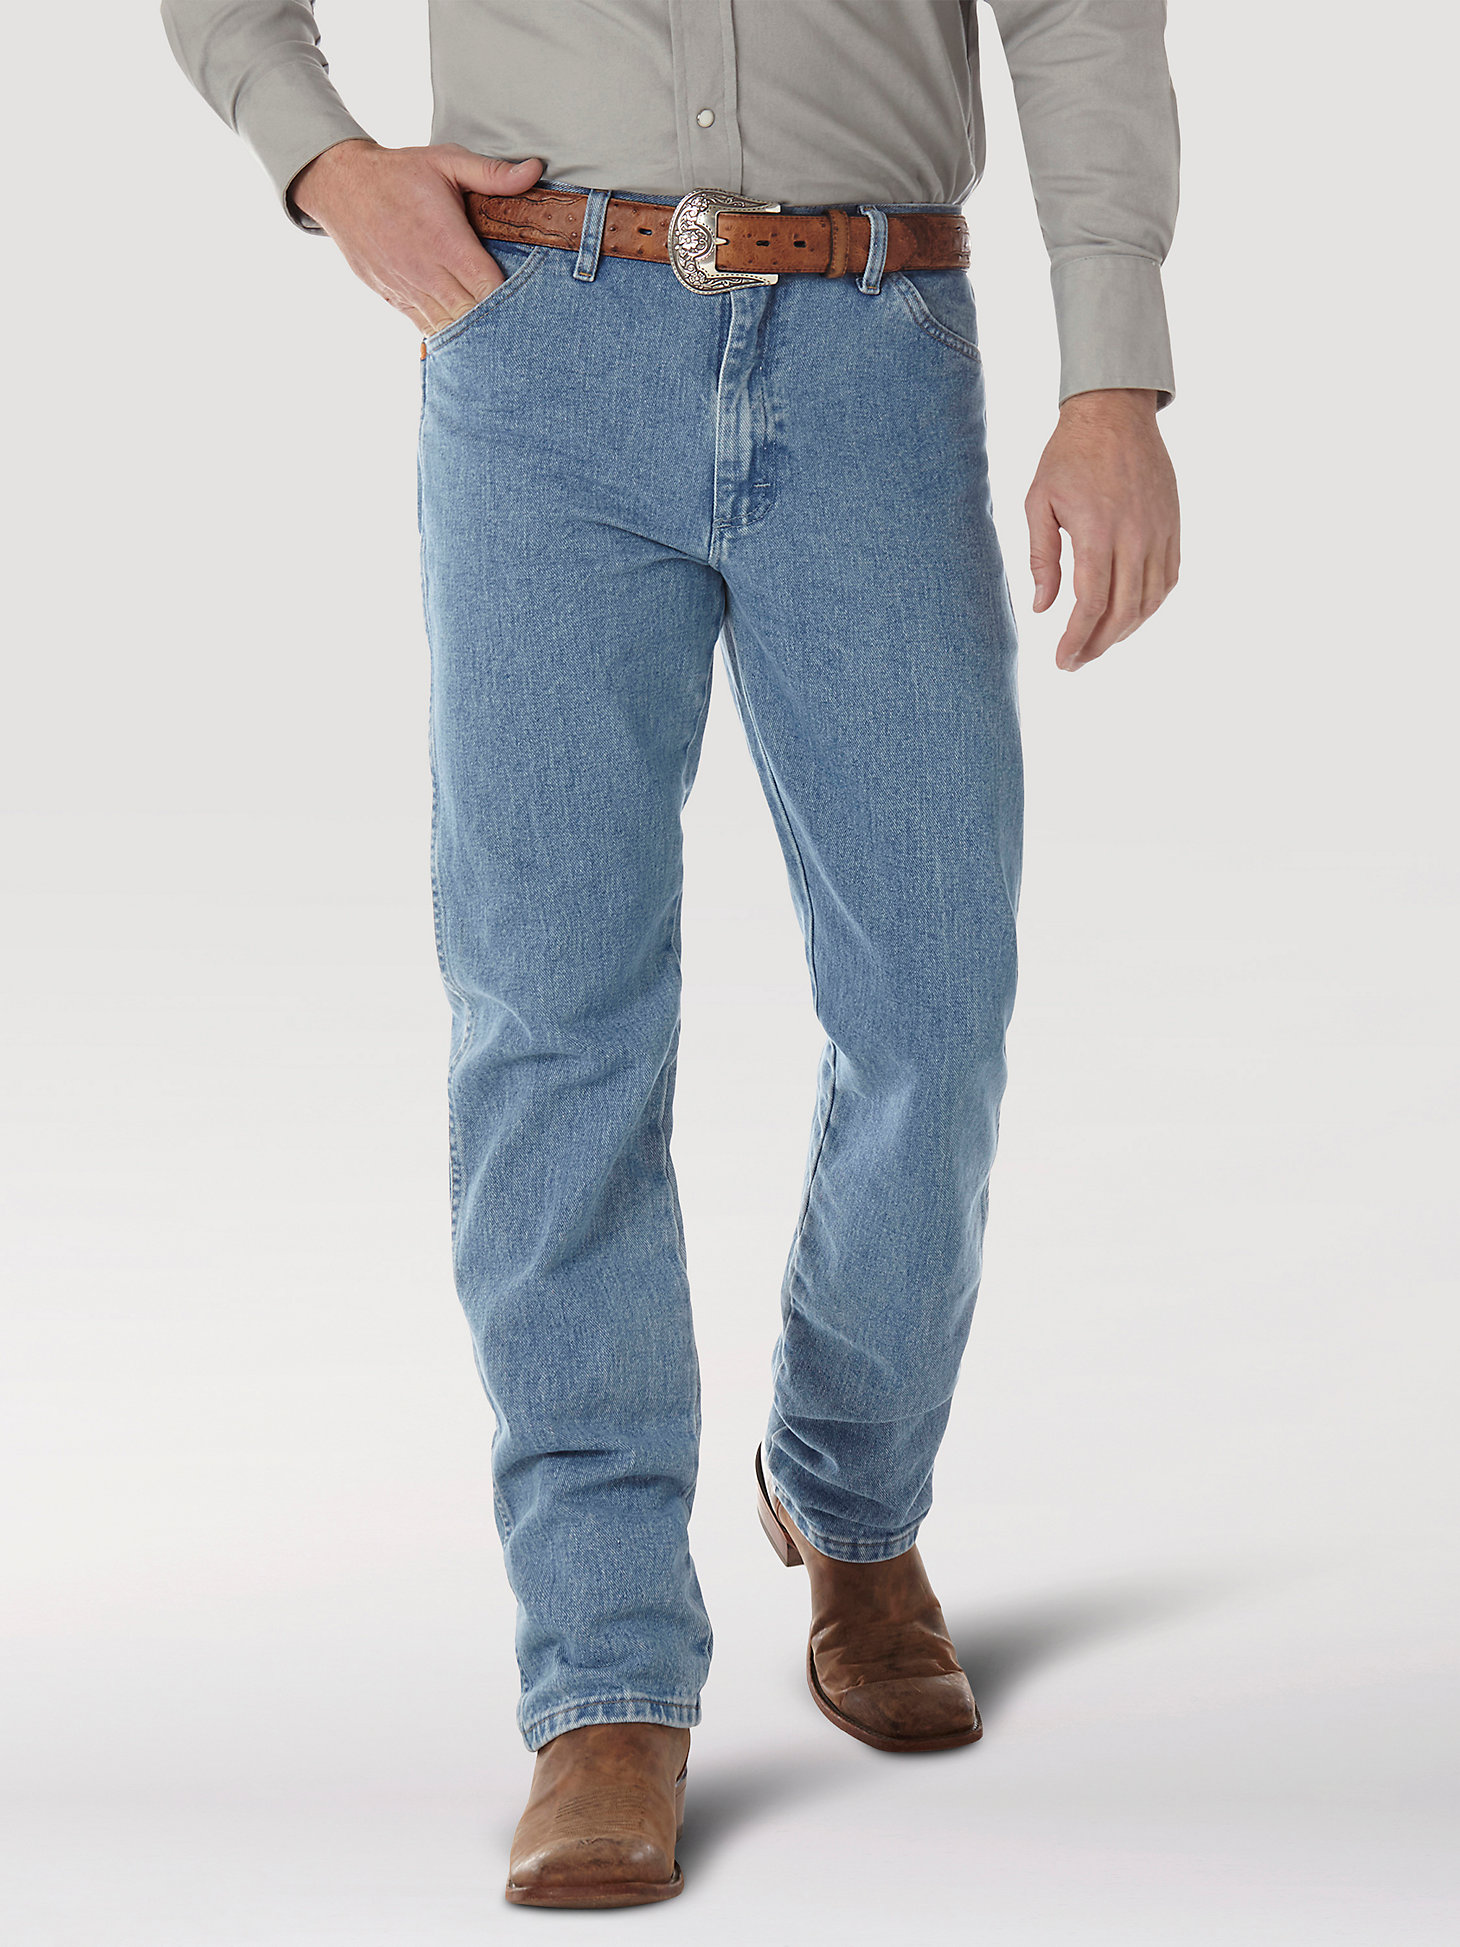 Wrangler® Cowboy Cut® Original Fit Jean in Antique Wash alternative view 6